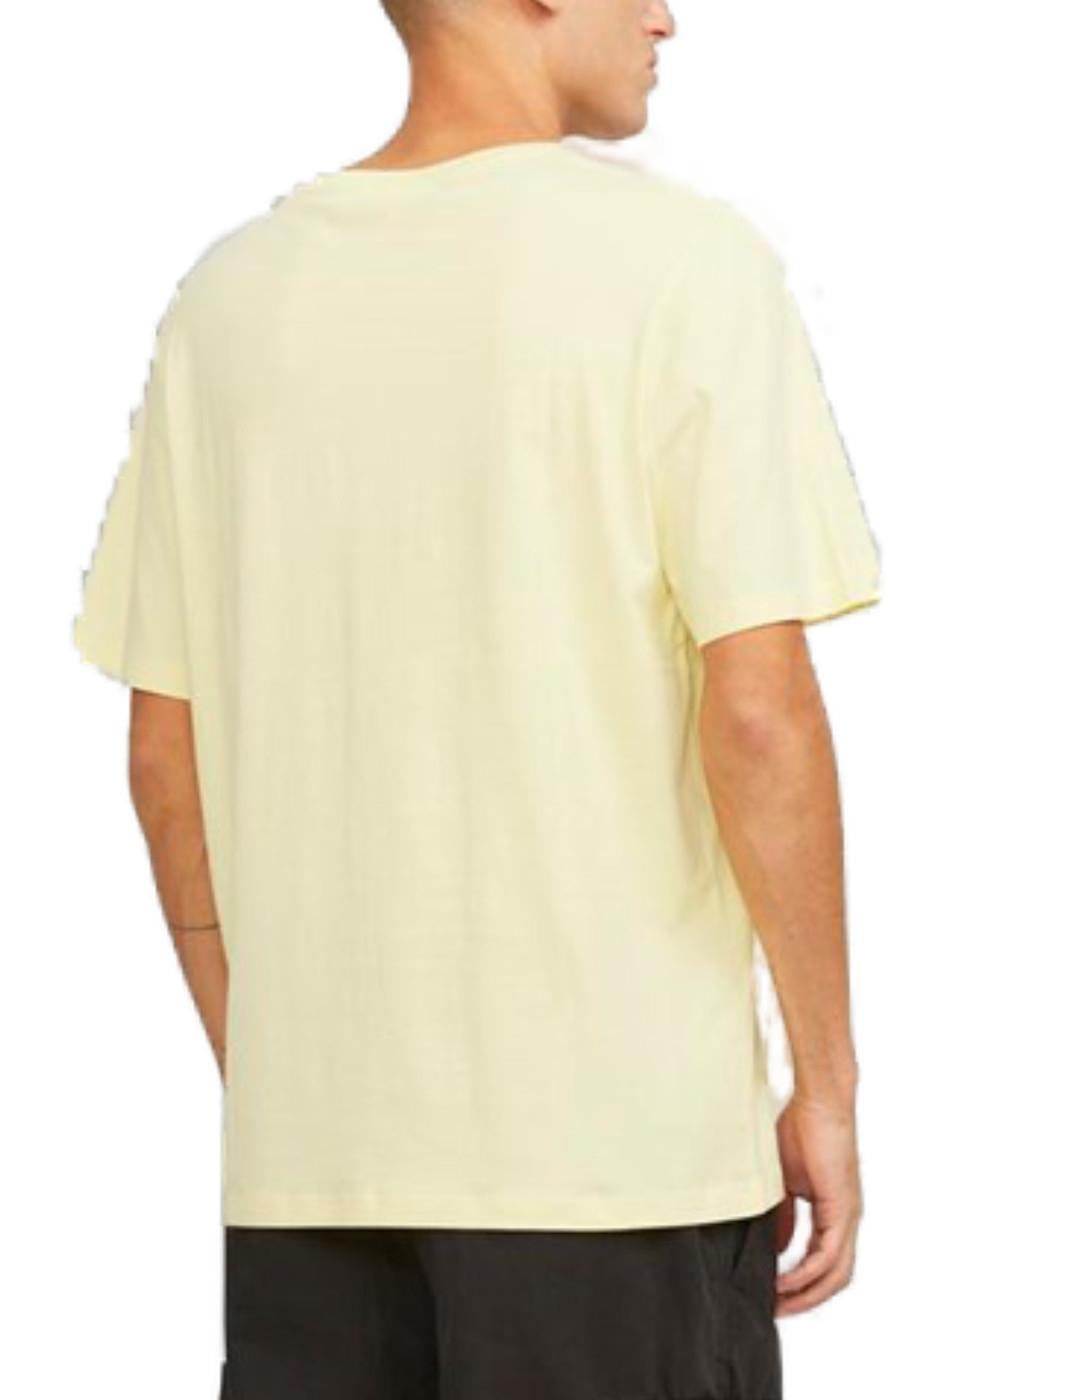 Camiseta Jack&Jones Organic amarilla manga corta de hombre